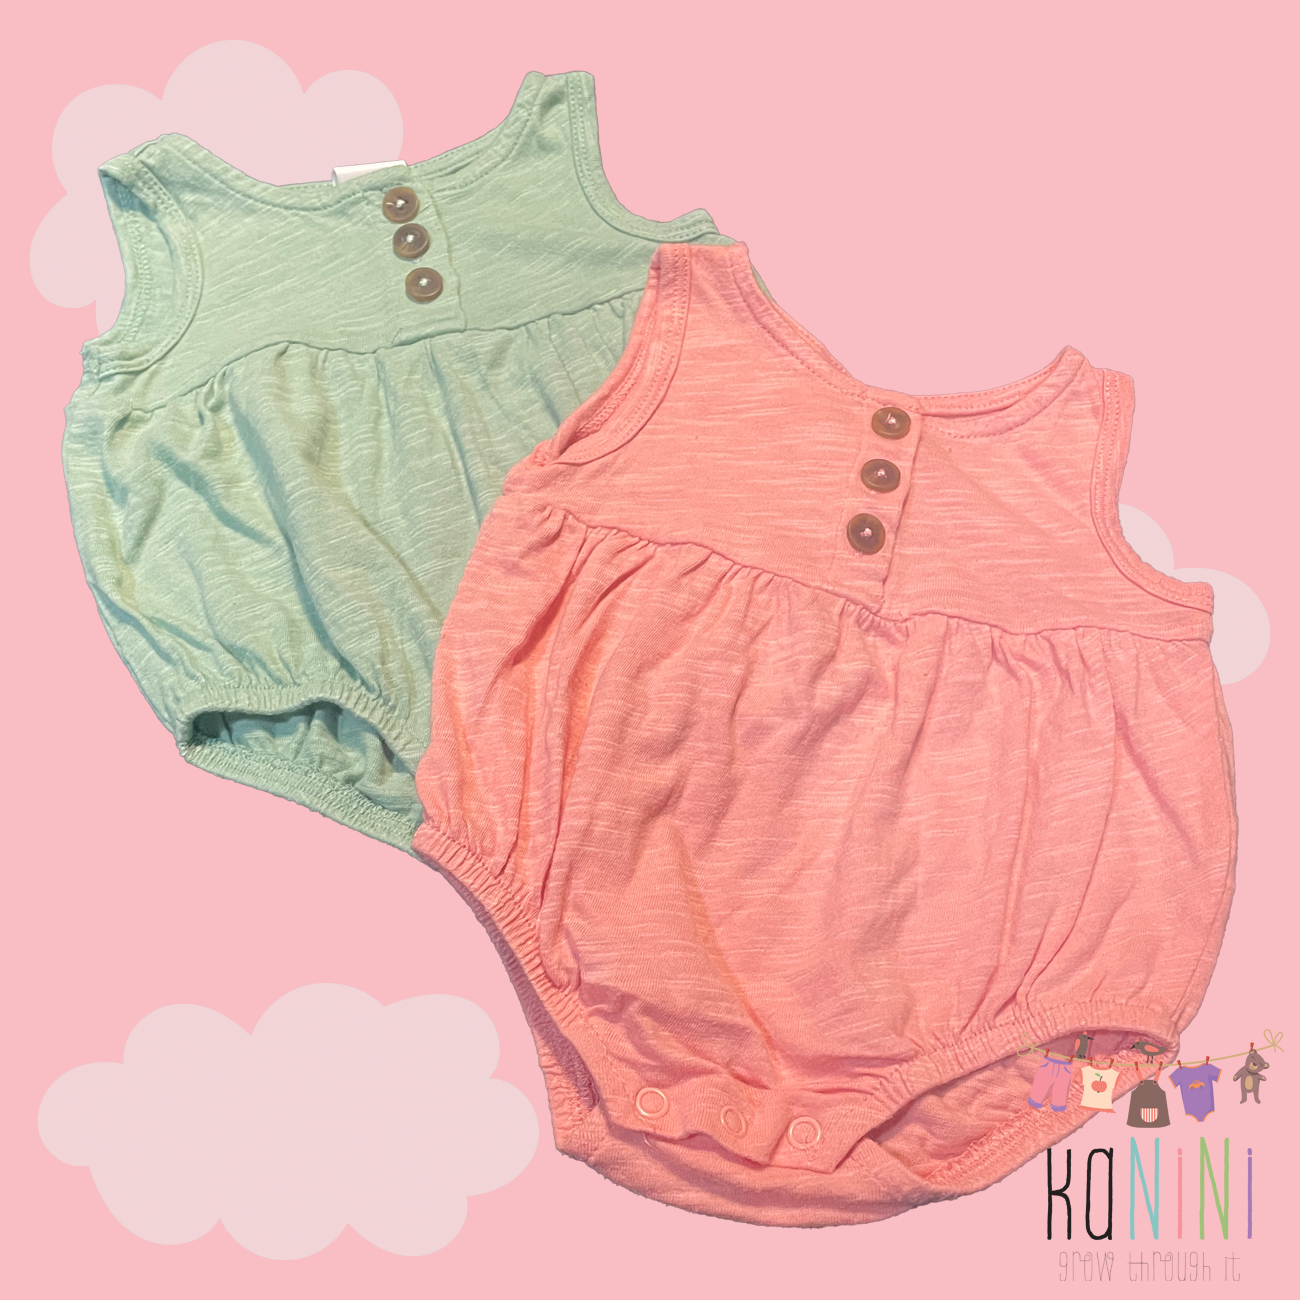 Featured image for “Cotton On Newborn Girls Romper Set”